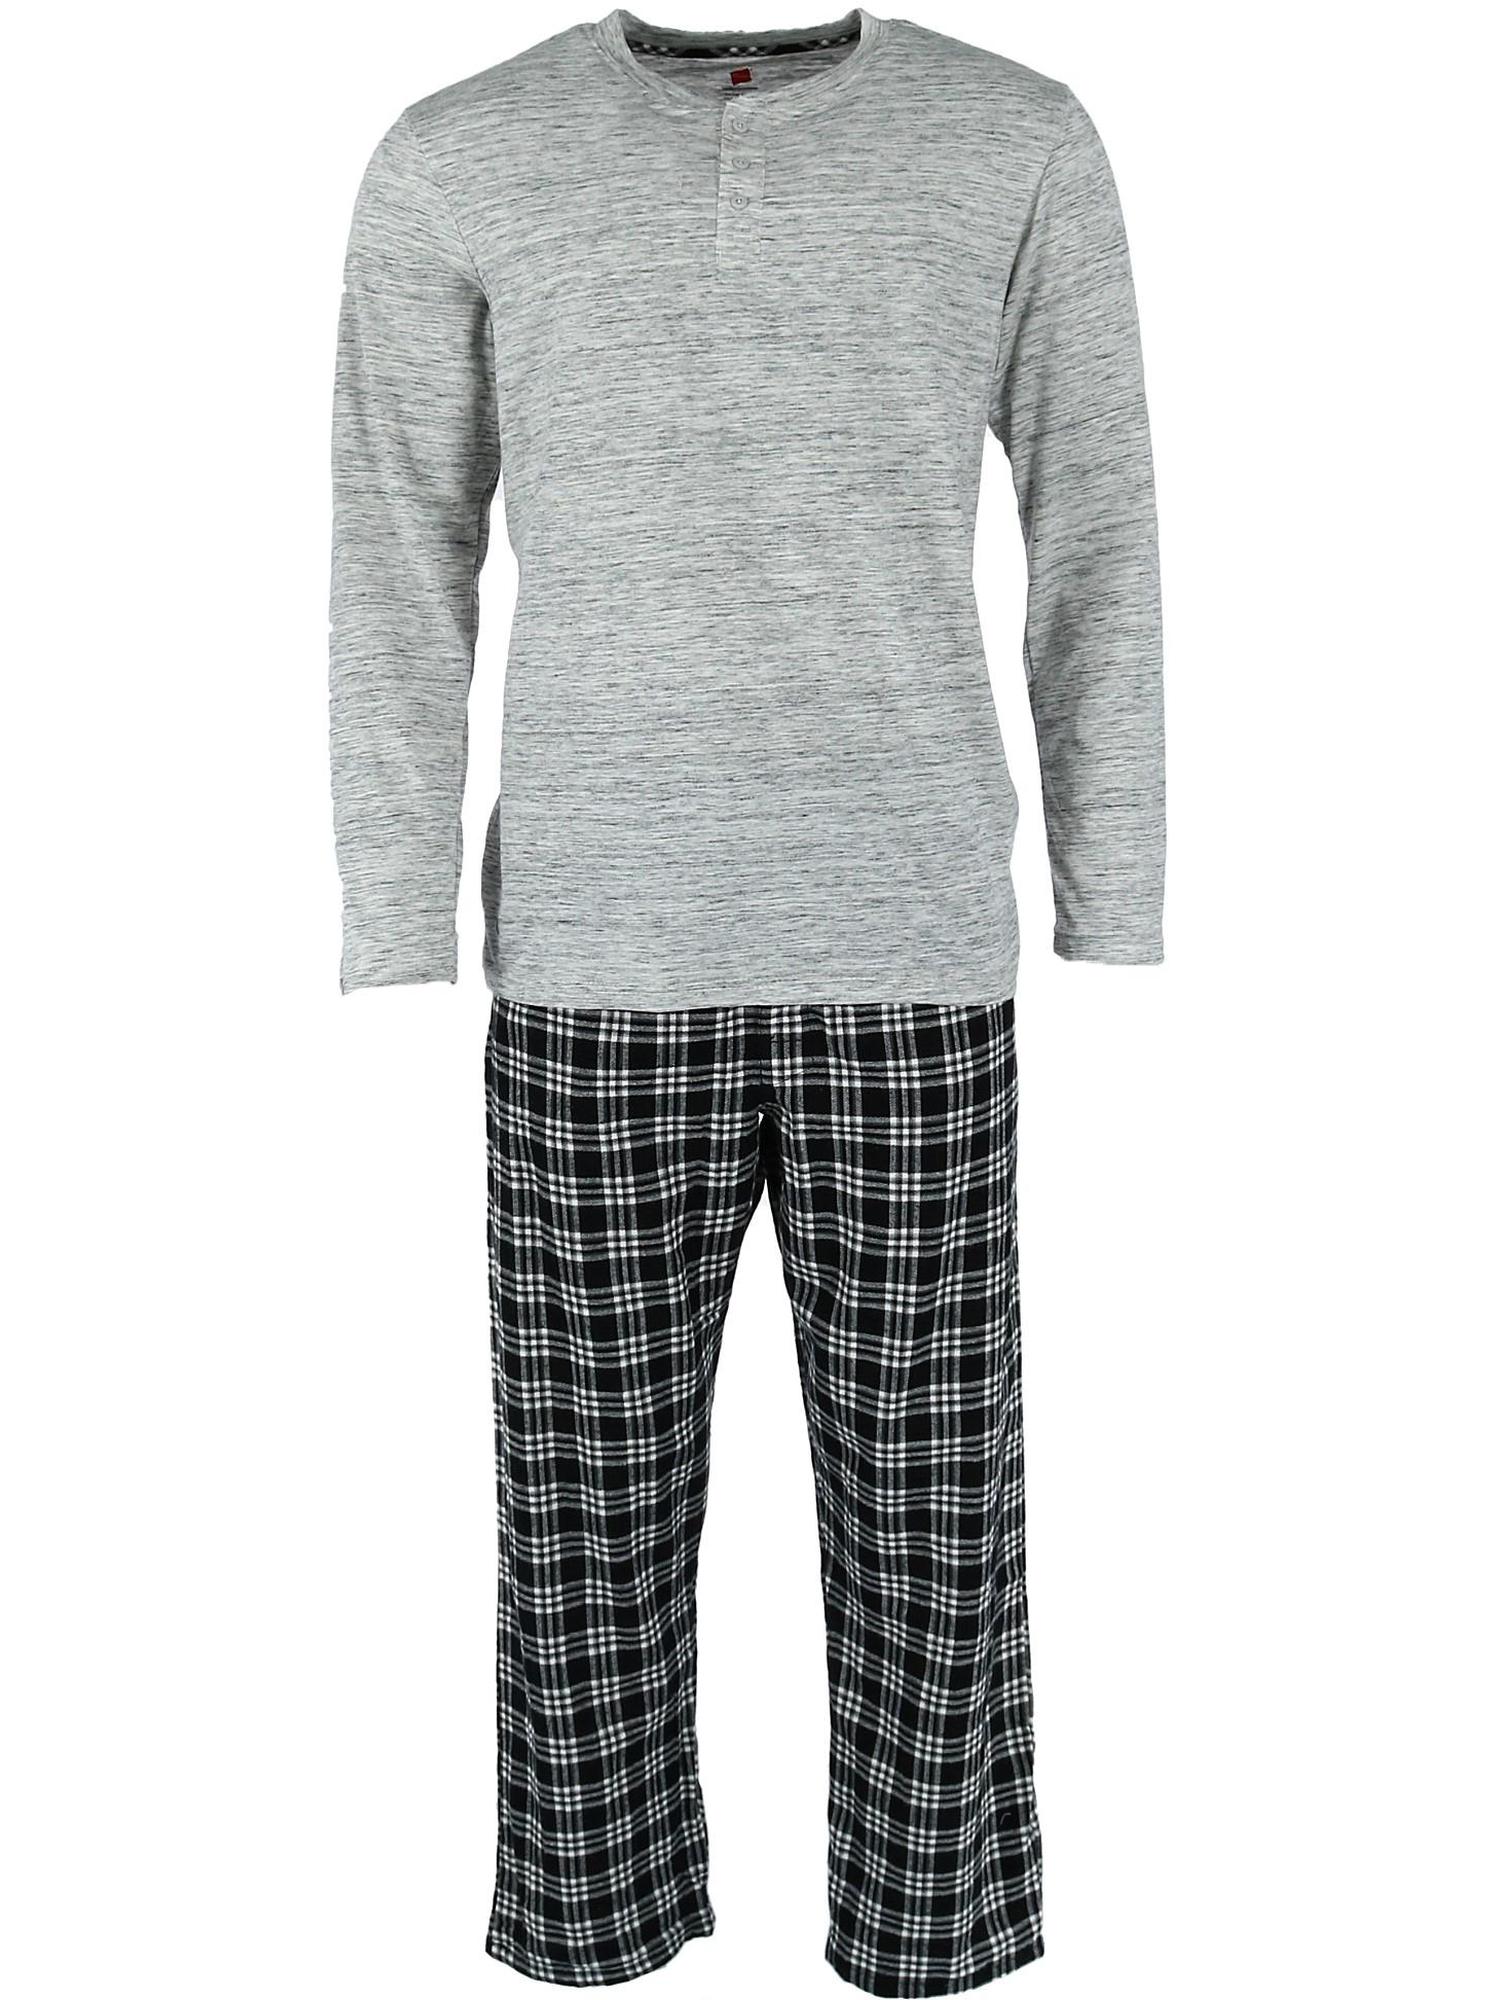 Hanes Mens Big and Tall Flannel Lounge Pajama Pants